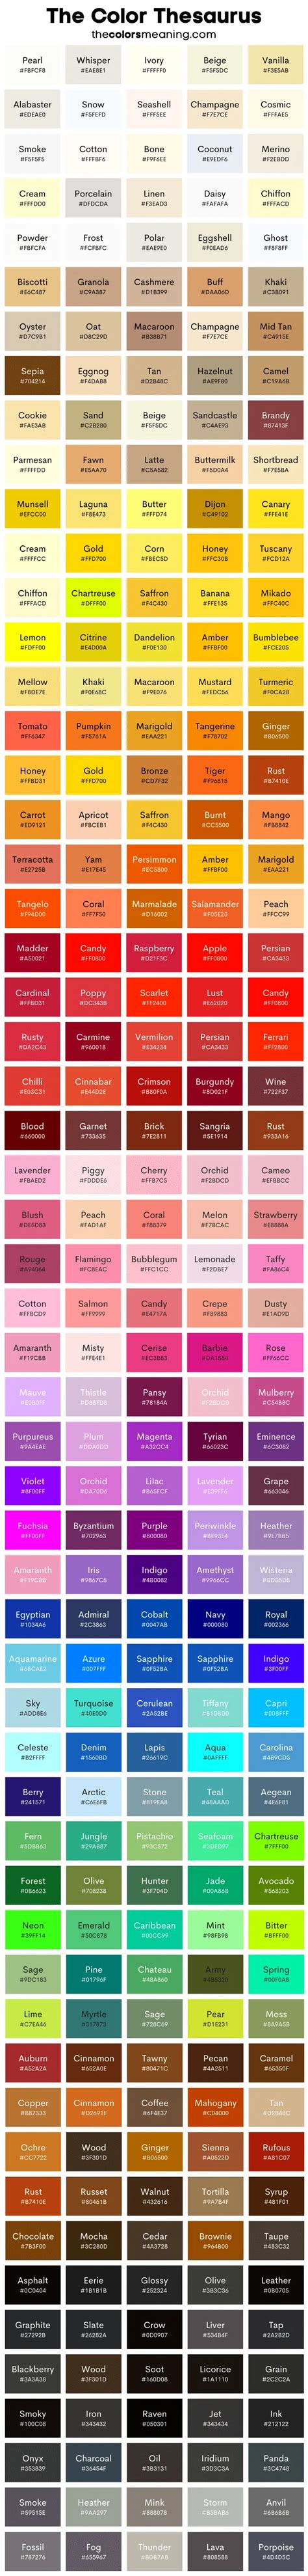 Unique Color Names Colorful Name Infographic